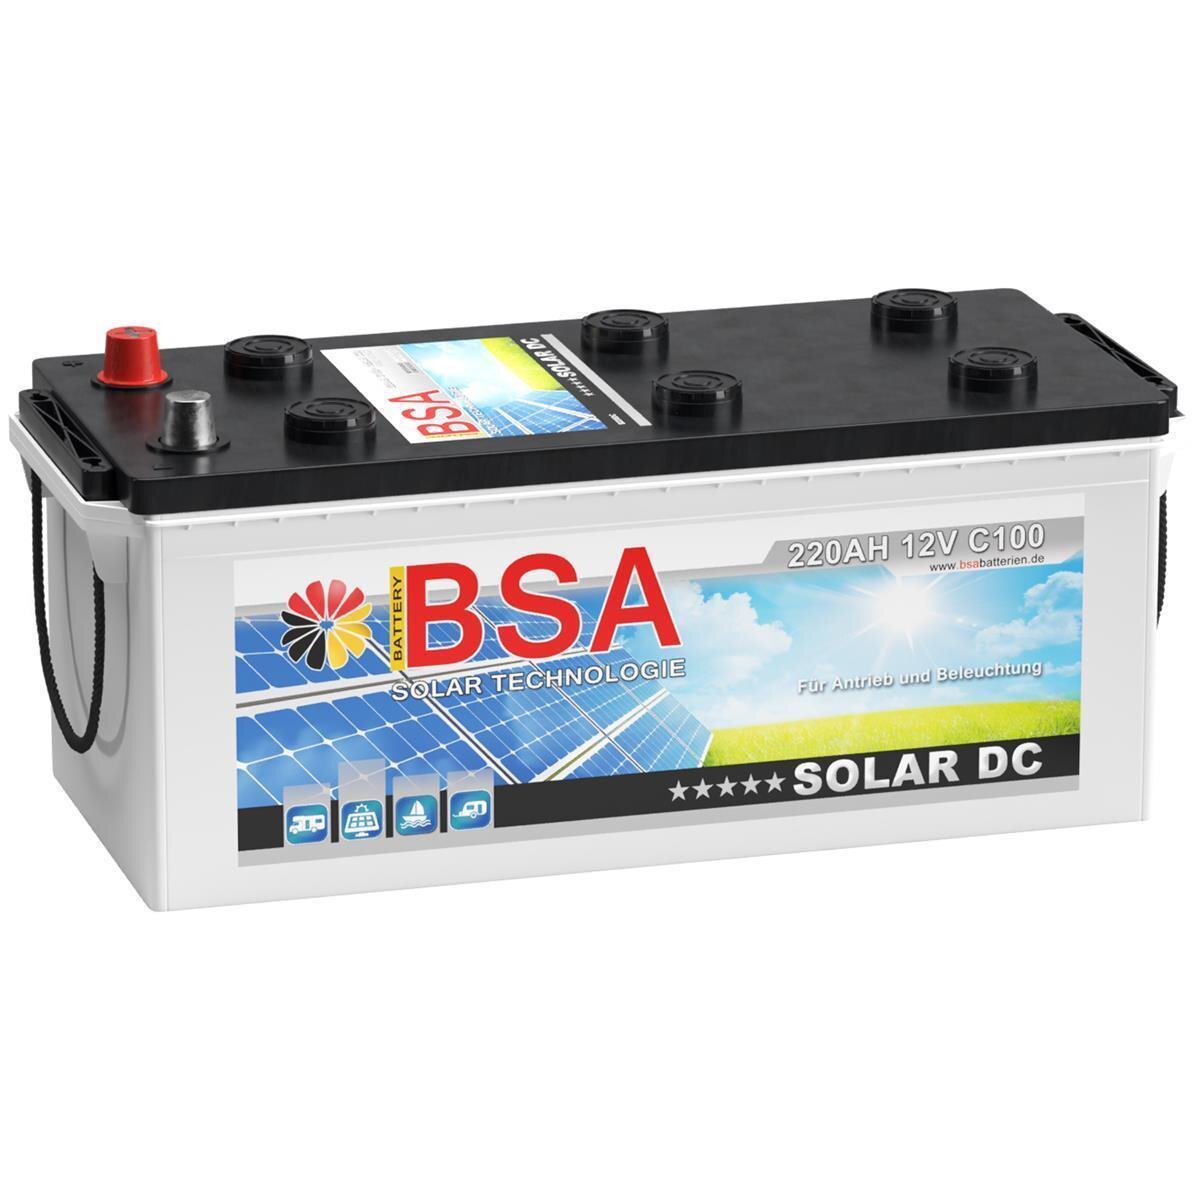 https://www.autobatterien24.com/media/image/product/1627/lg/bsa-solarbatterie-220ah-12v.jpg